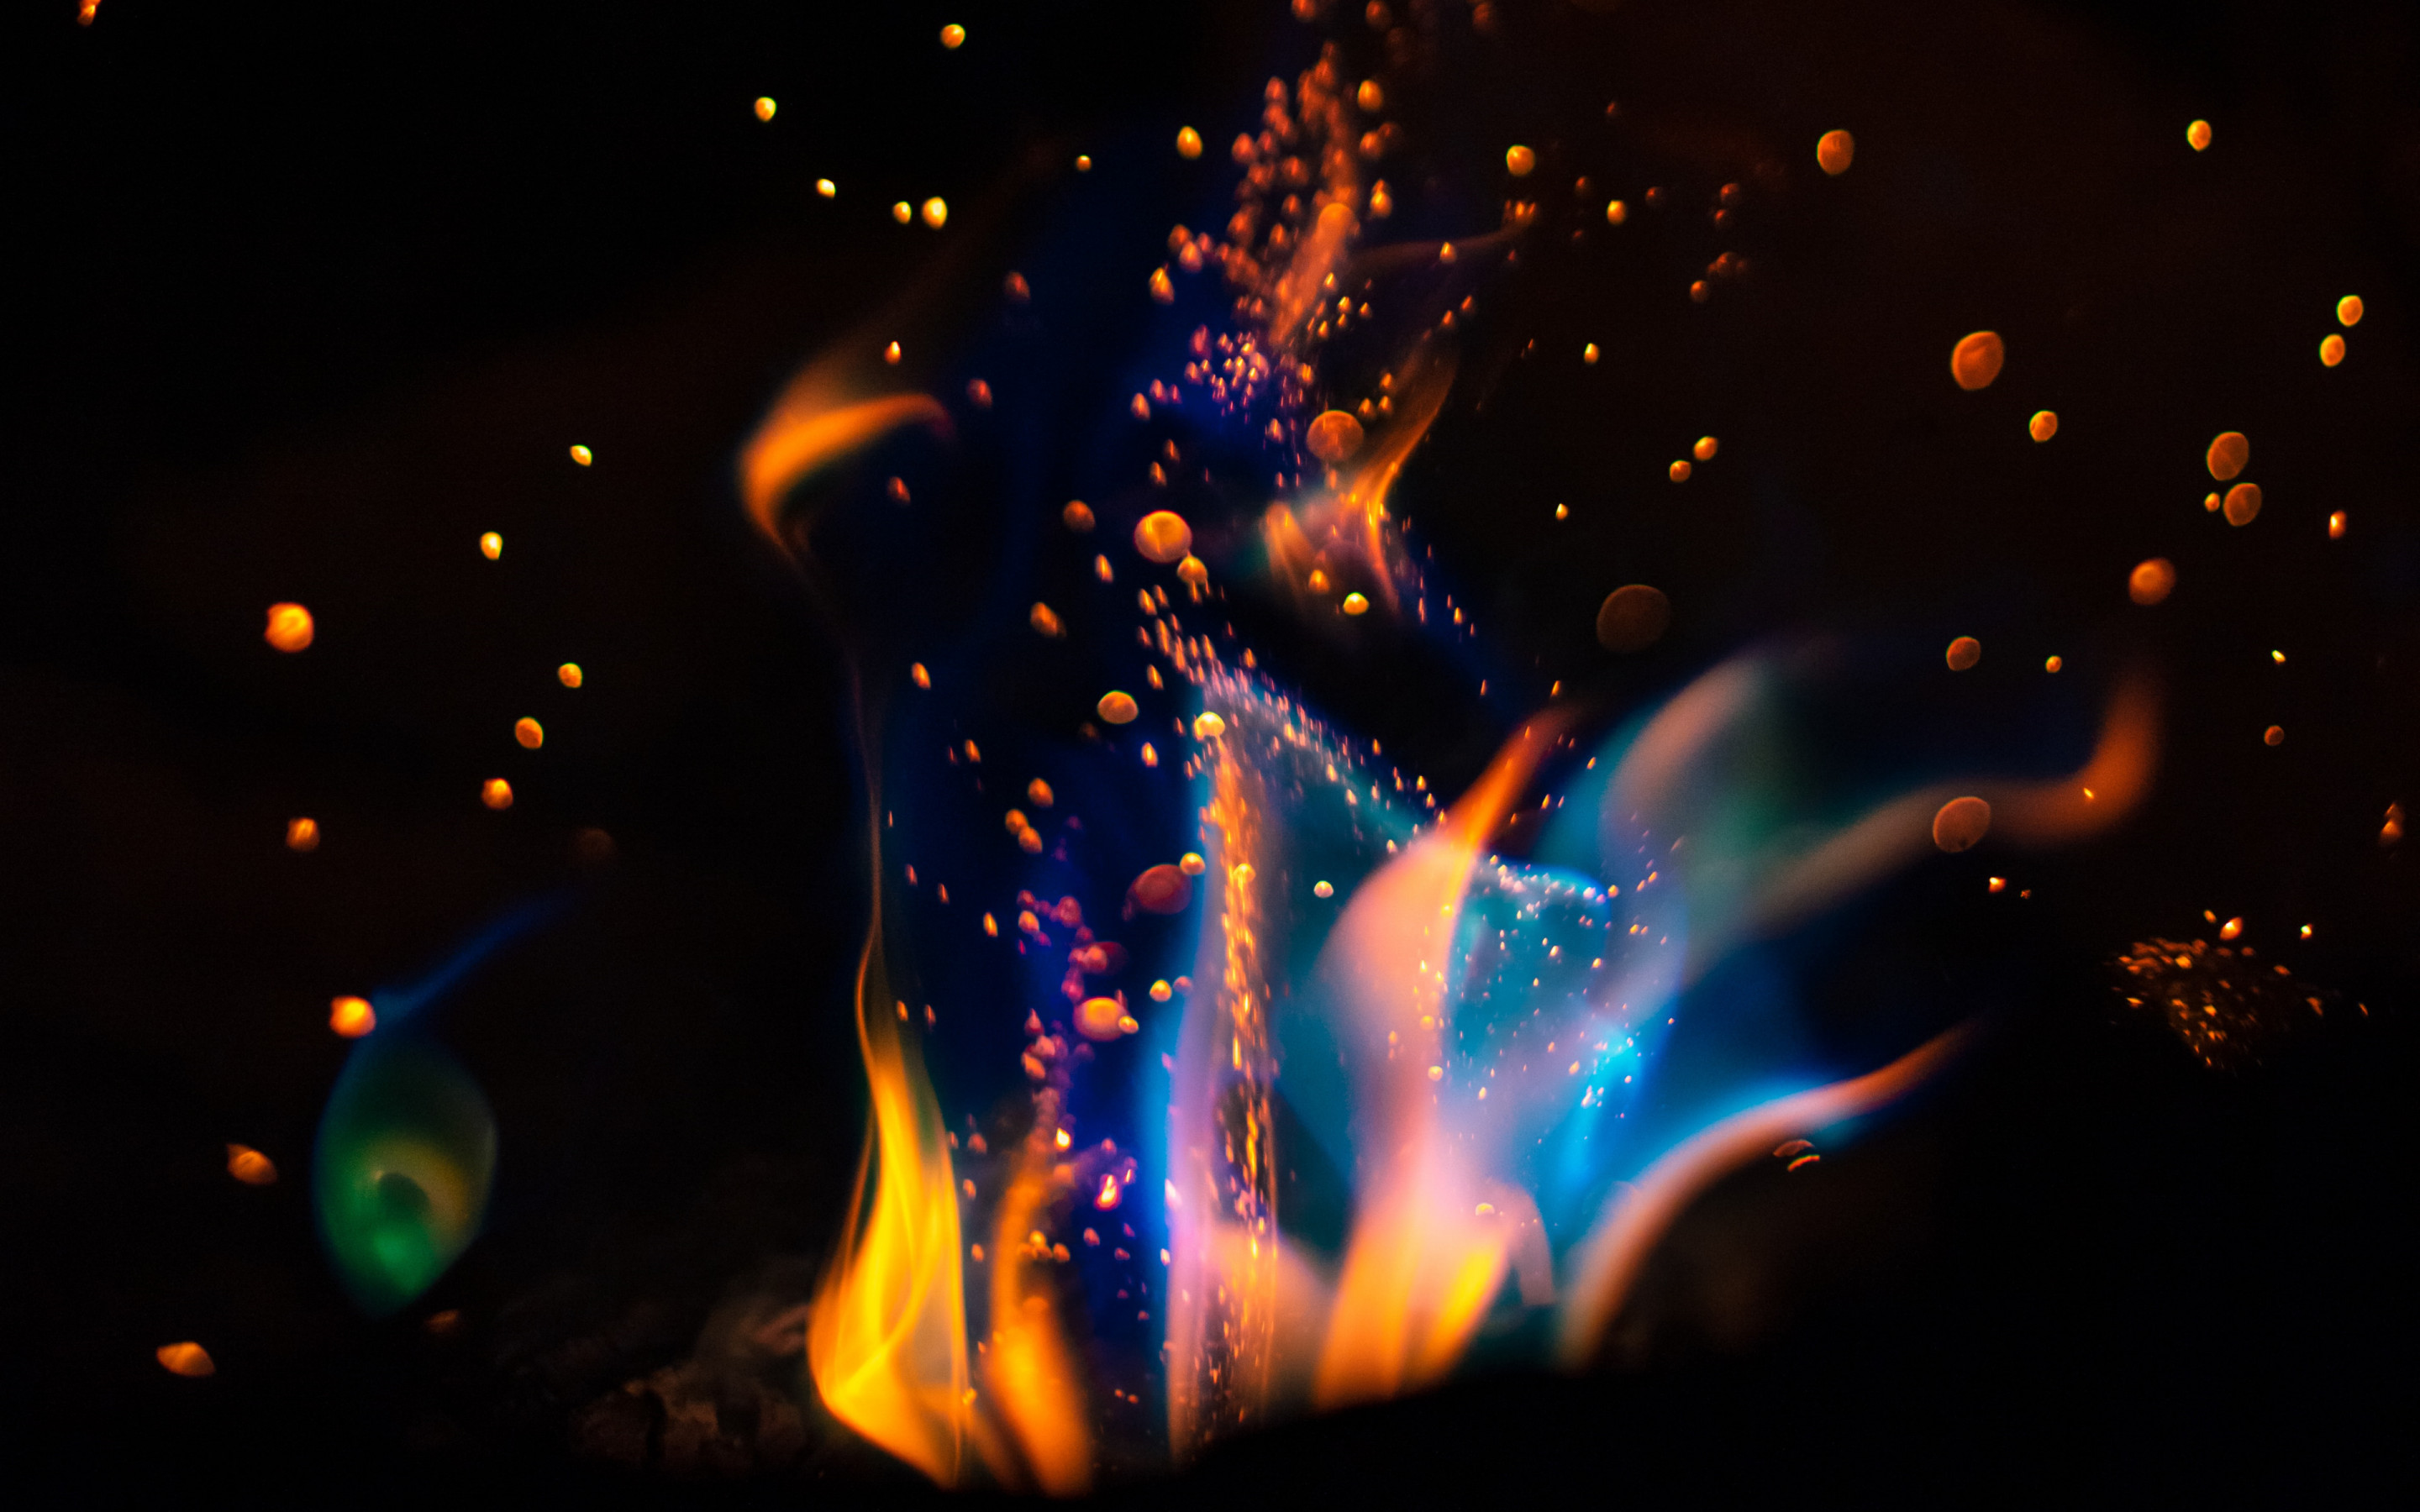 Hot flames in darkness wallpaper 2880x1800